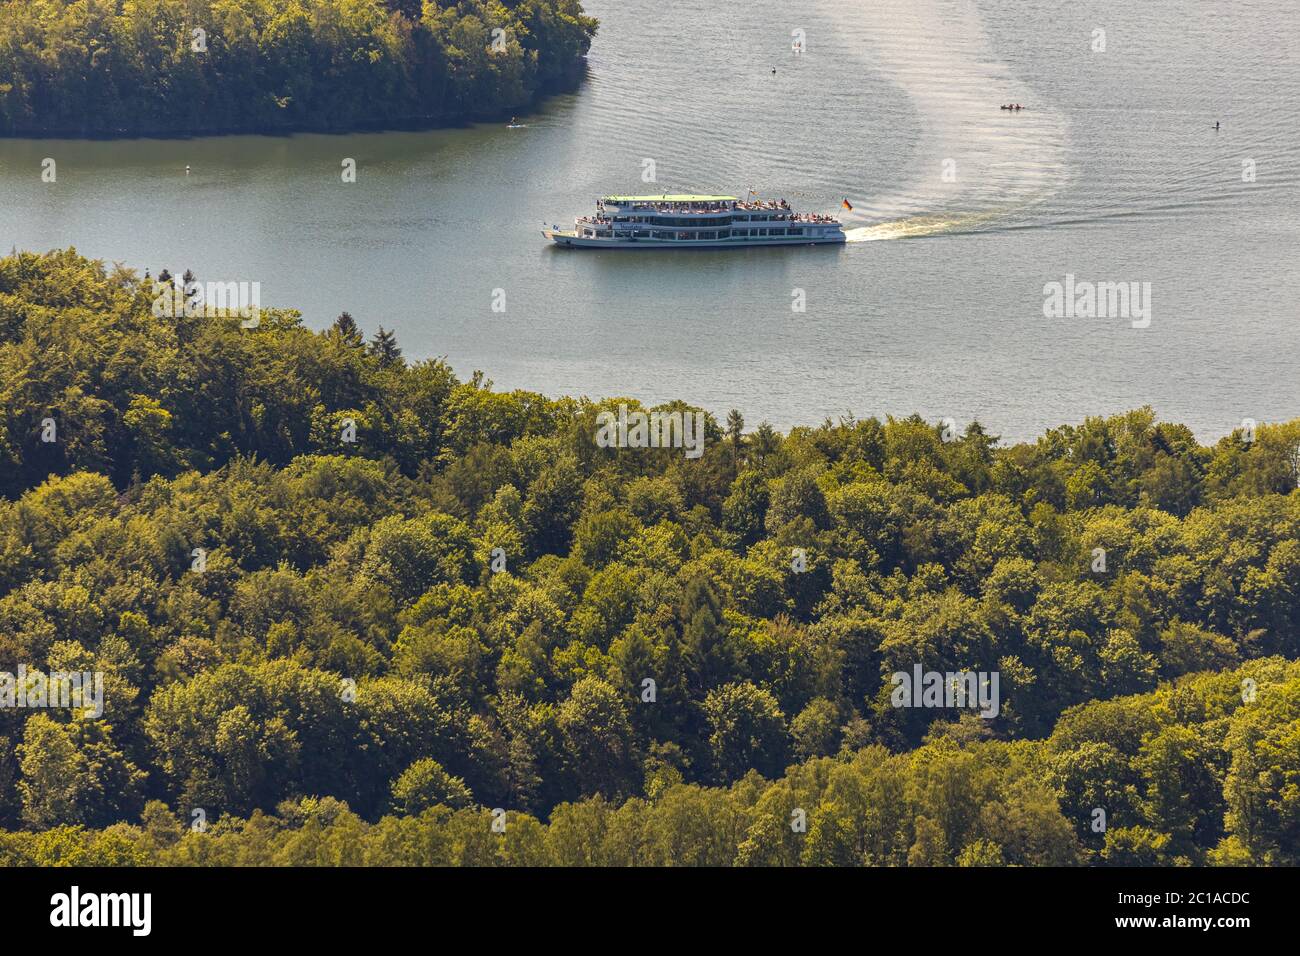 Aerial photograph, excursion ship Westfalen on the Biggetalsperre, Attendorn, Sauerland, North Rhine-Westphalia, Germany, excursions, excursion ship, Stock Photo